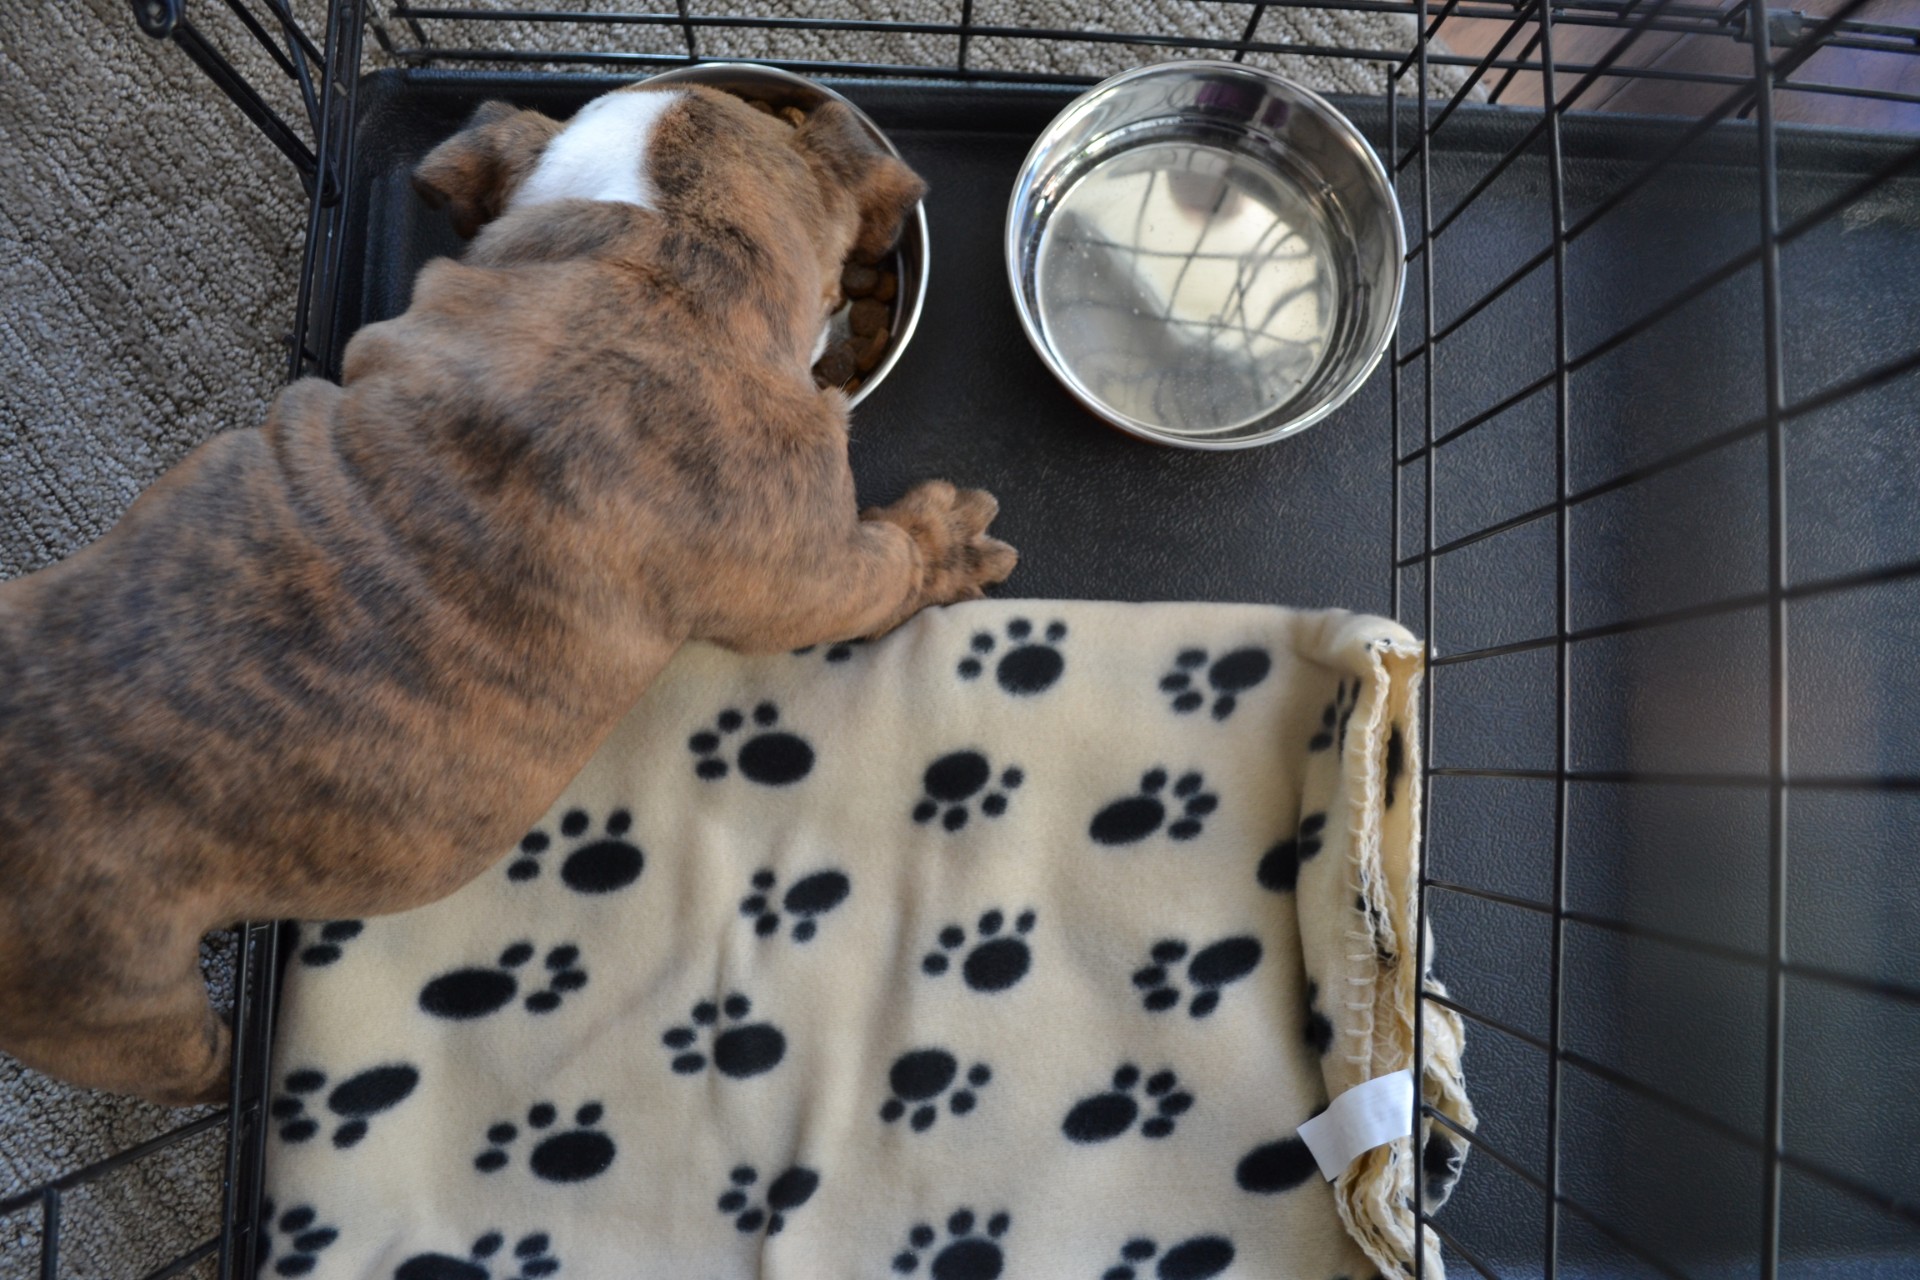 Bulldog eating from bowl in metal crate